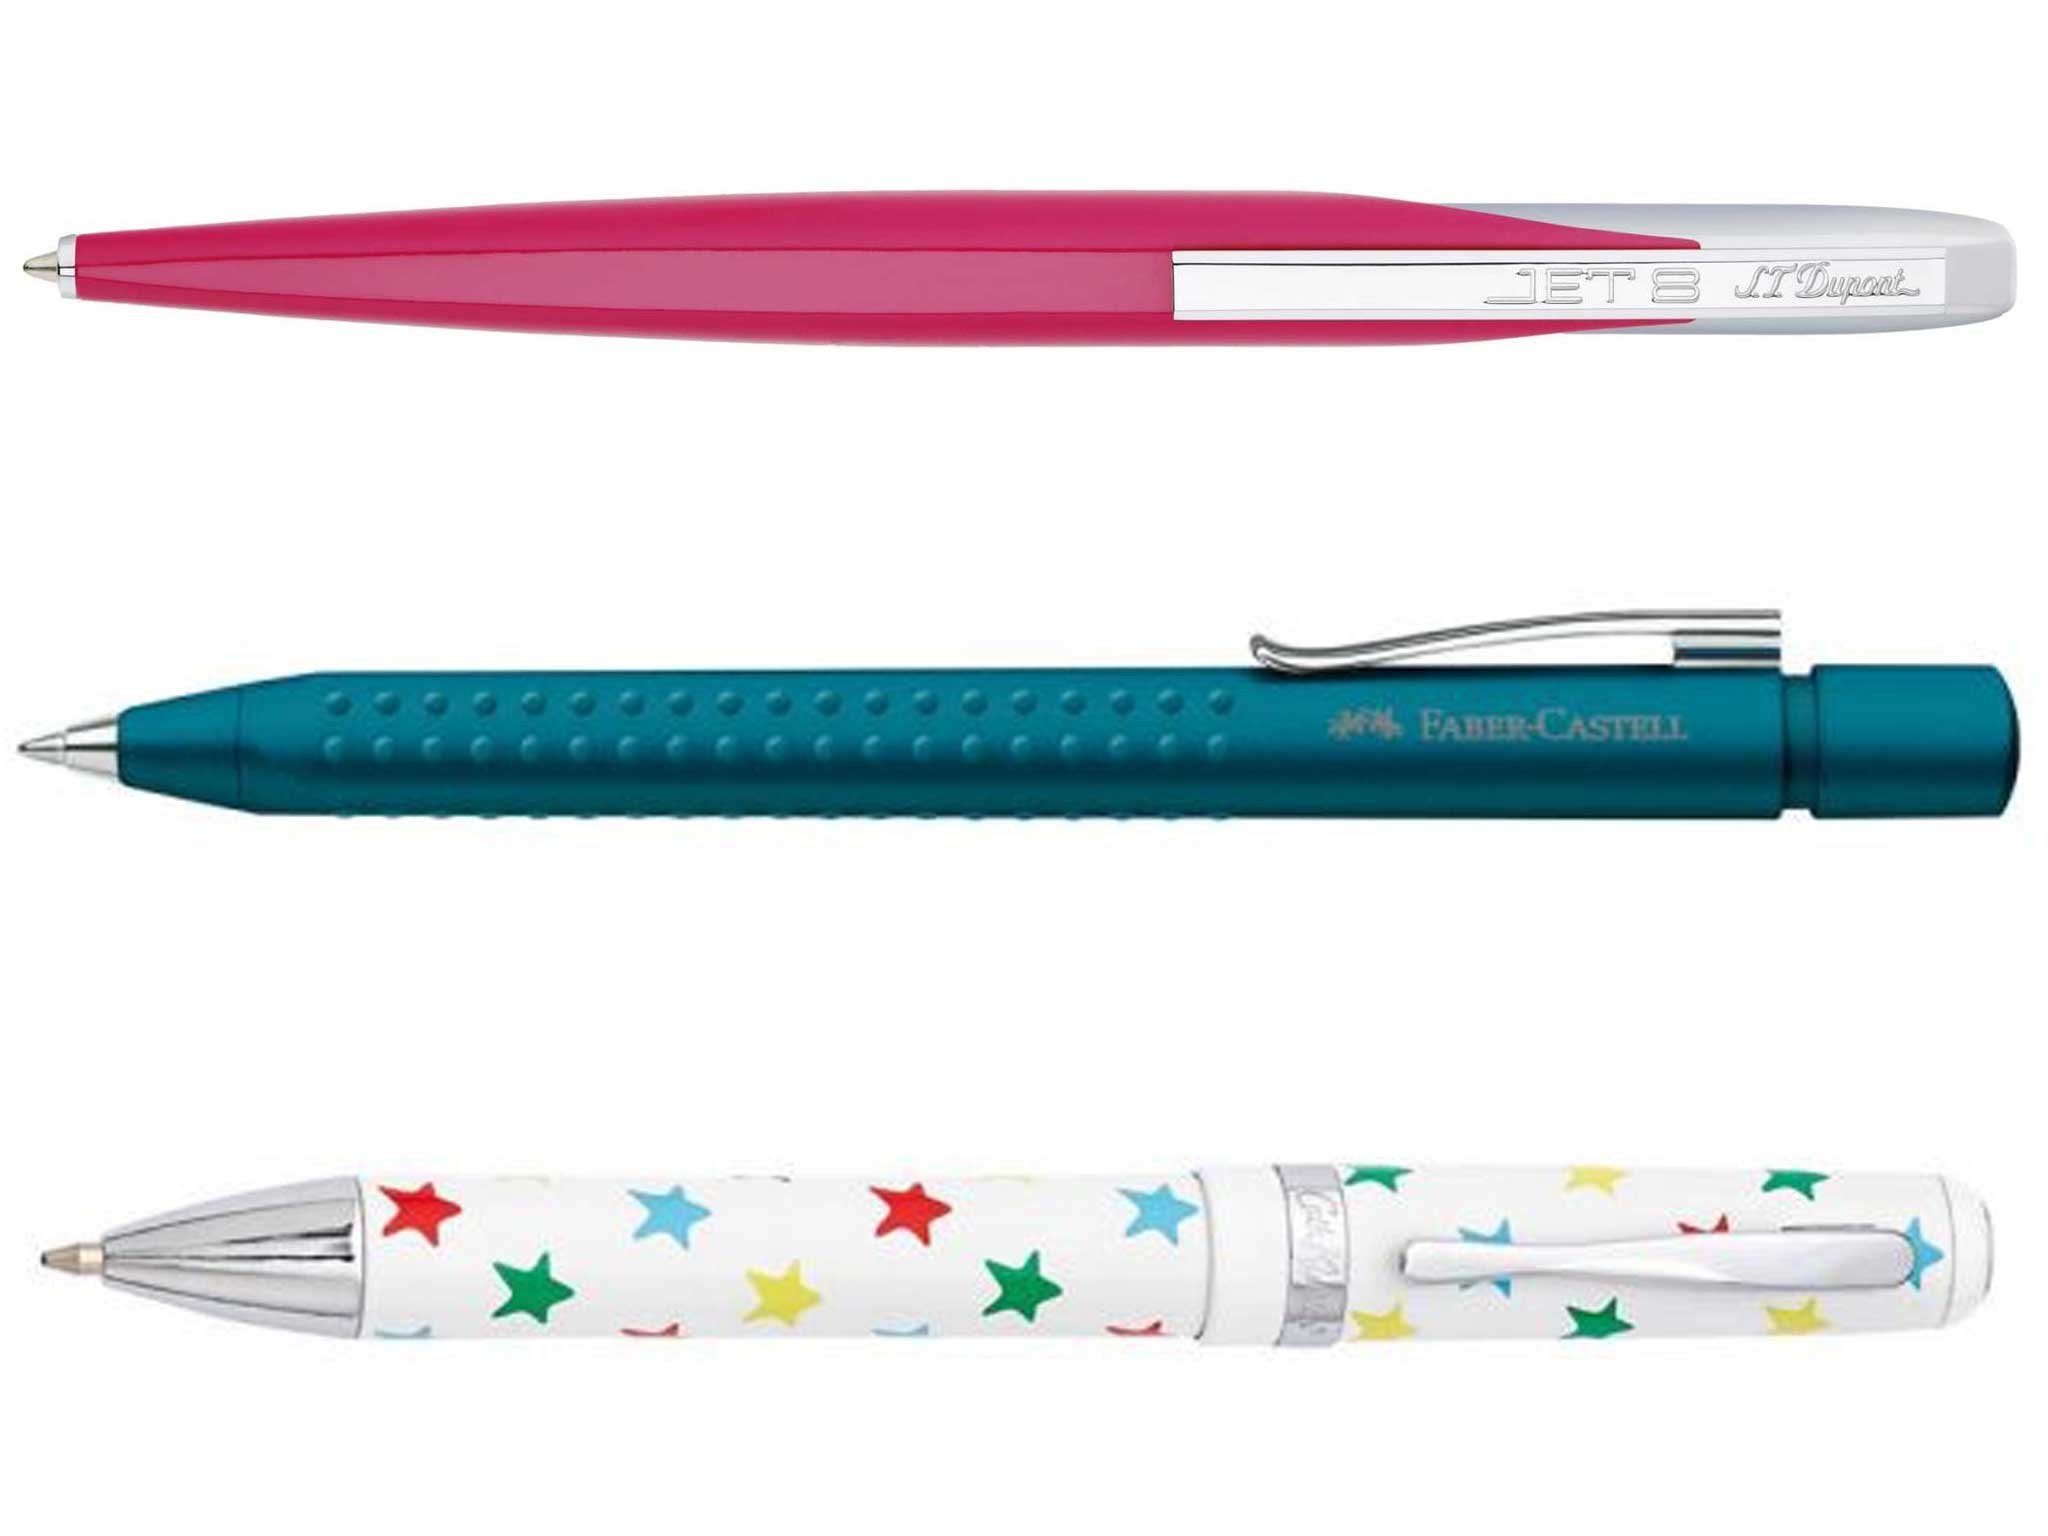 Mightier than the sword: 10 best pens